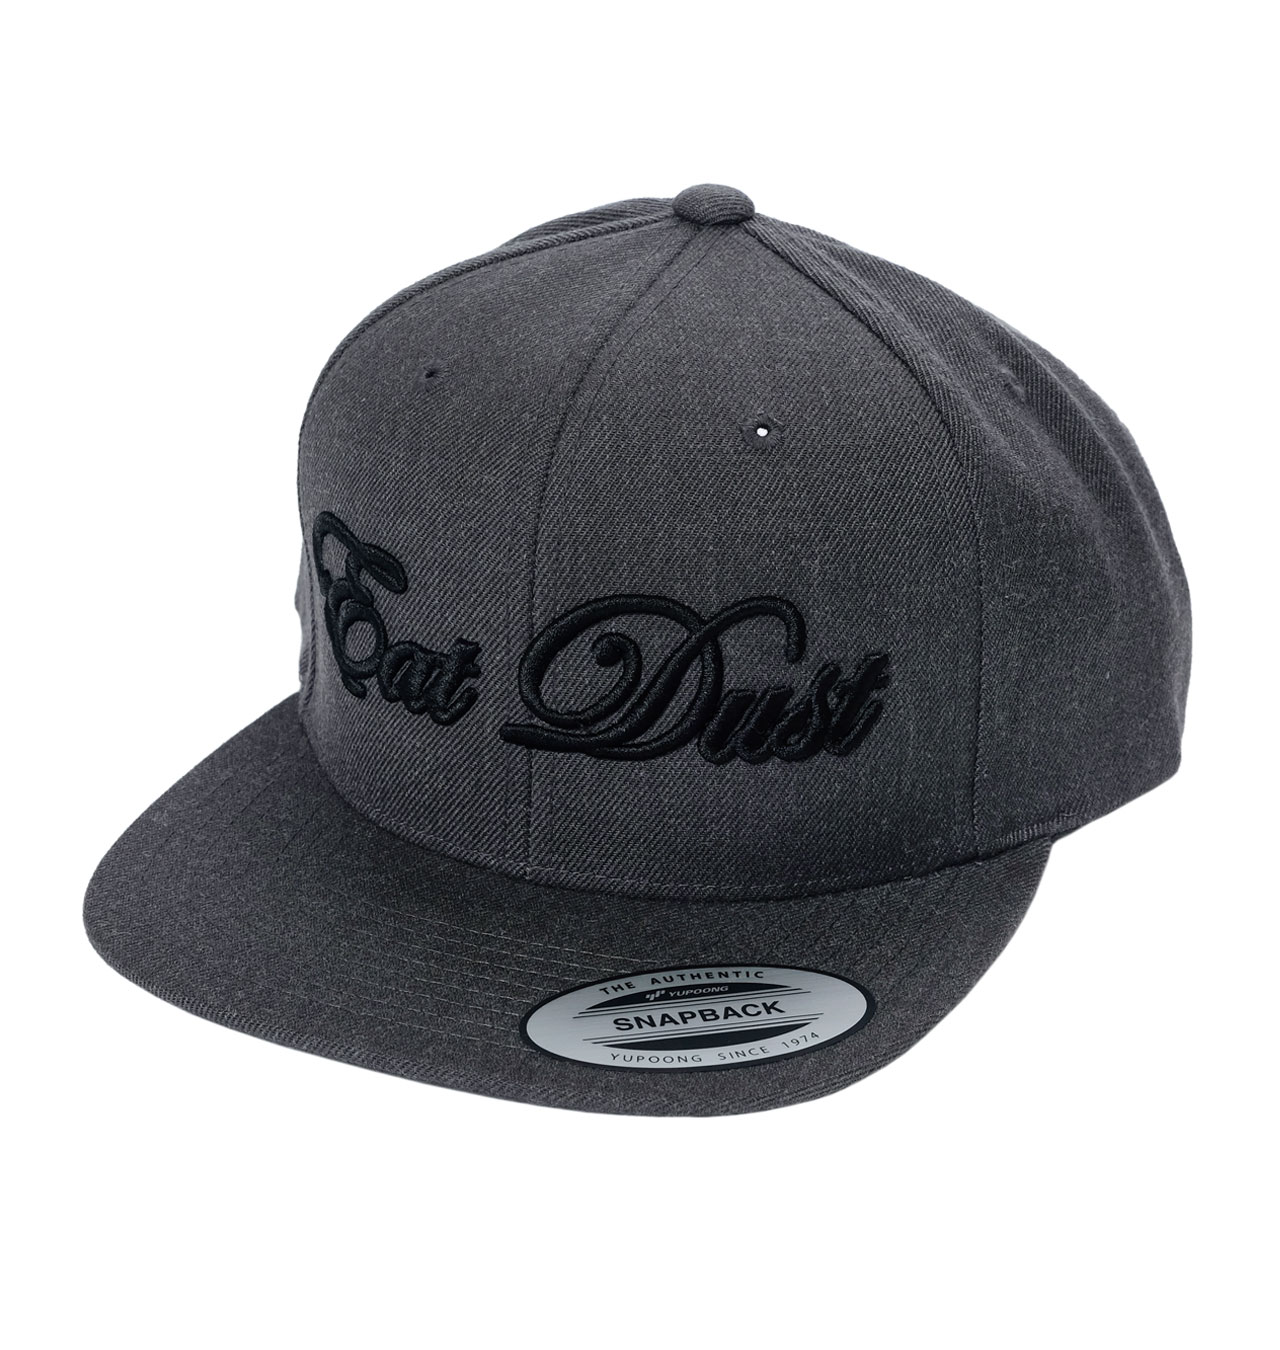 Eat Dust - 6 panel ED Logo Snapback Hat - Grey